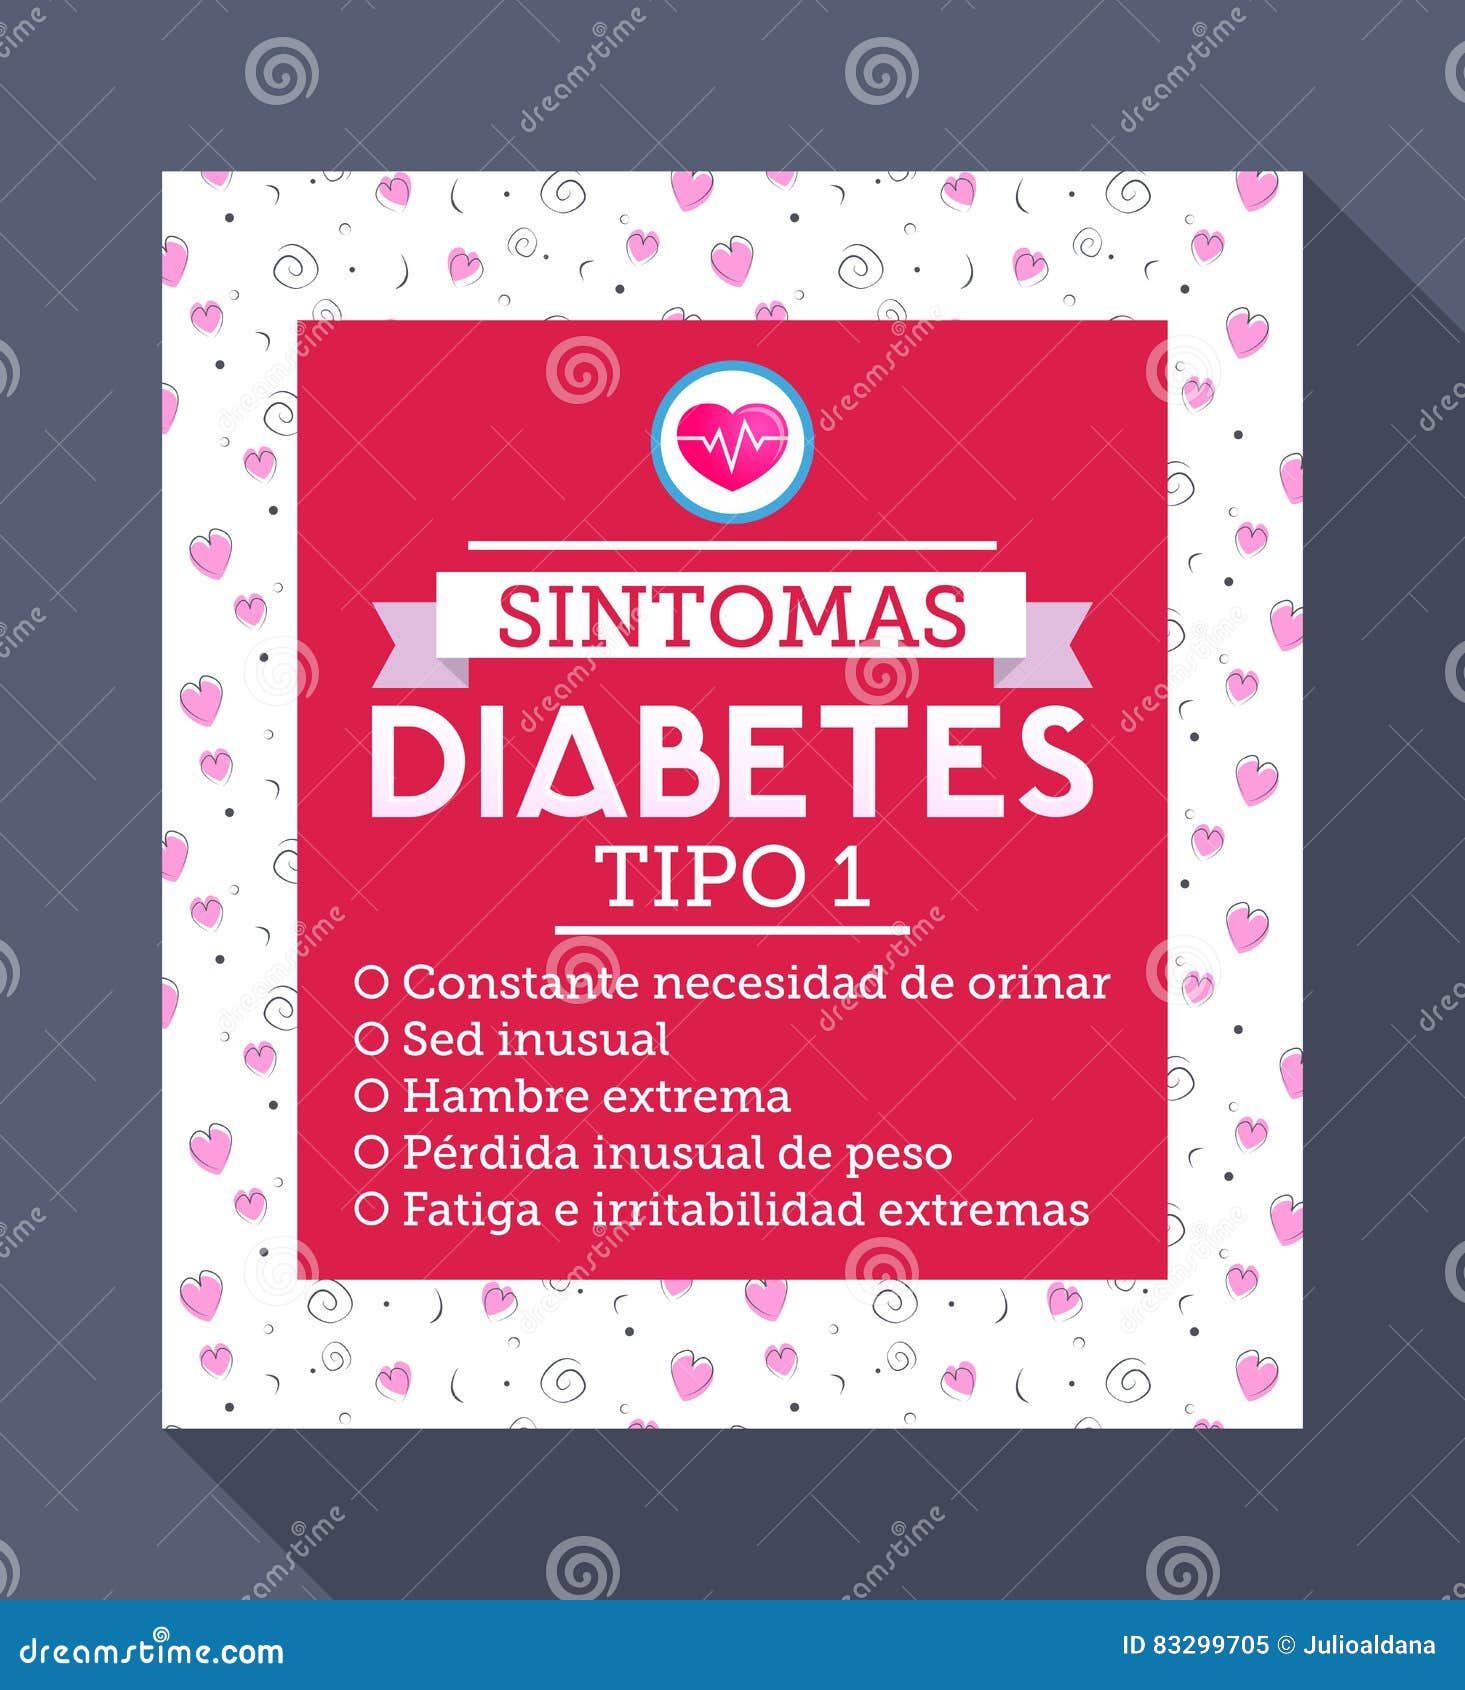 sintomas diabetes tipo 1, spanish translation: symptoms of type 1 diabetes,   informative text